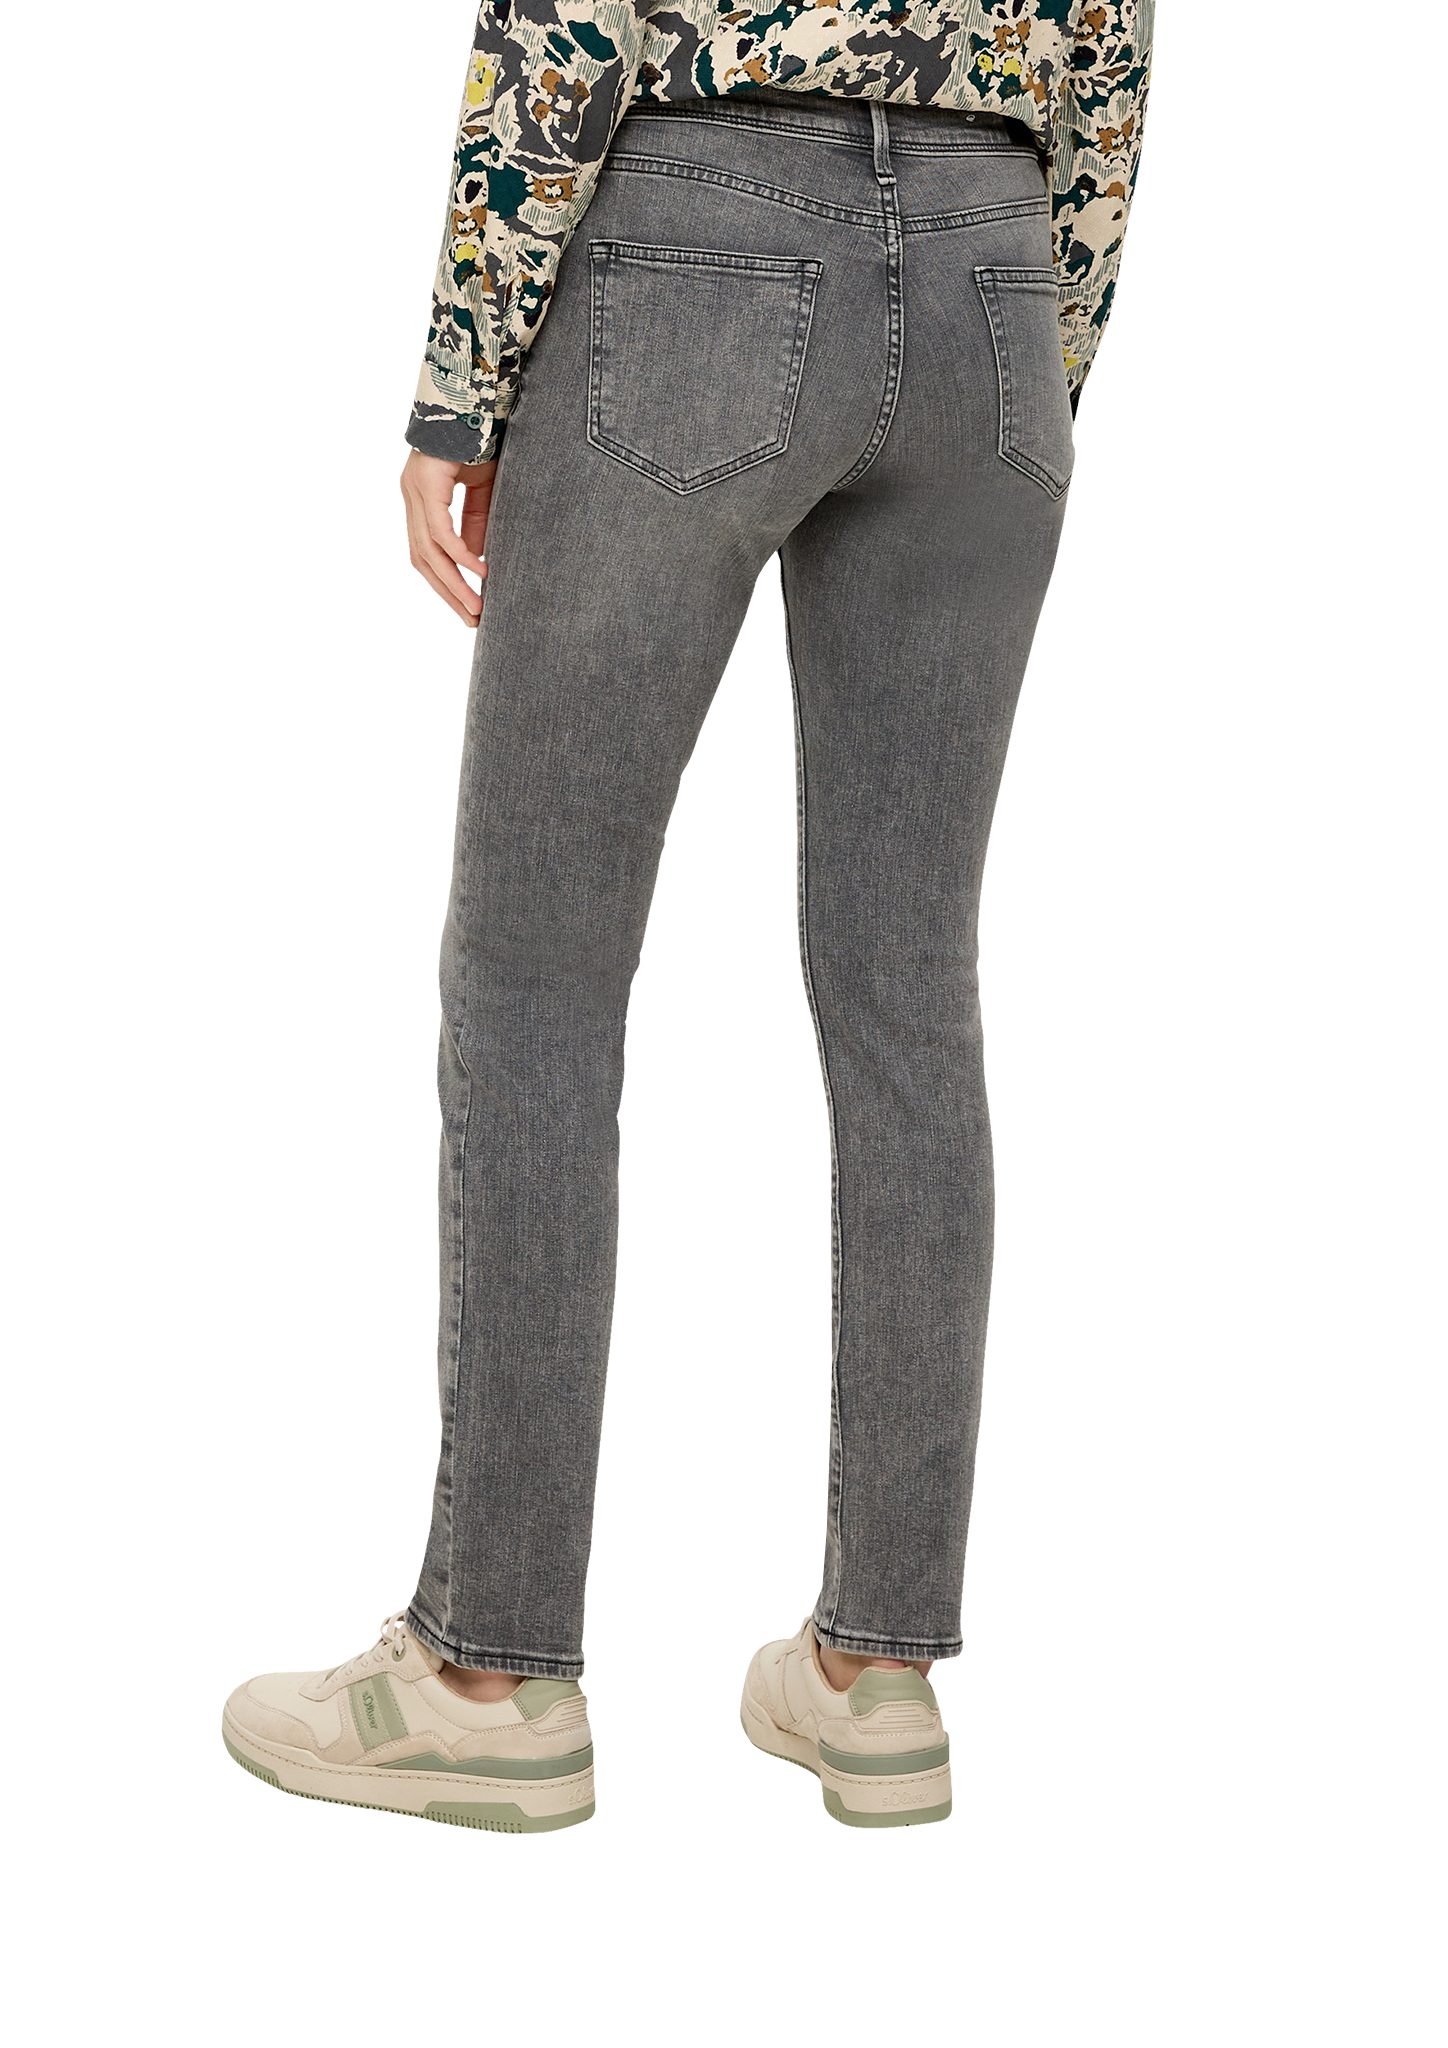 Leder-Patch Fit/ Betsy / meliert Slim Jeans / Rise Baumwollstretch 5-Pocket-Jeans Leg / Slim grau Mid s.Oliver